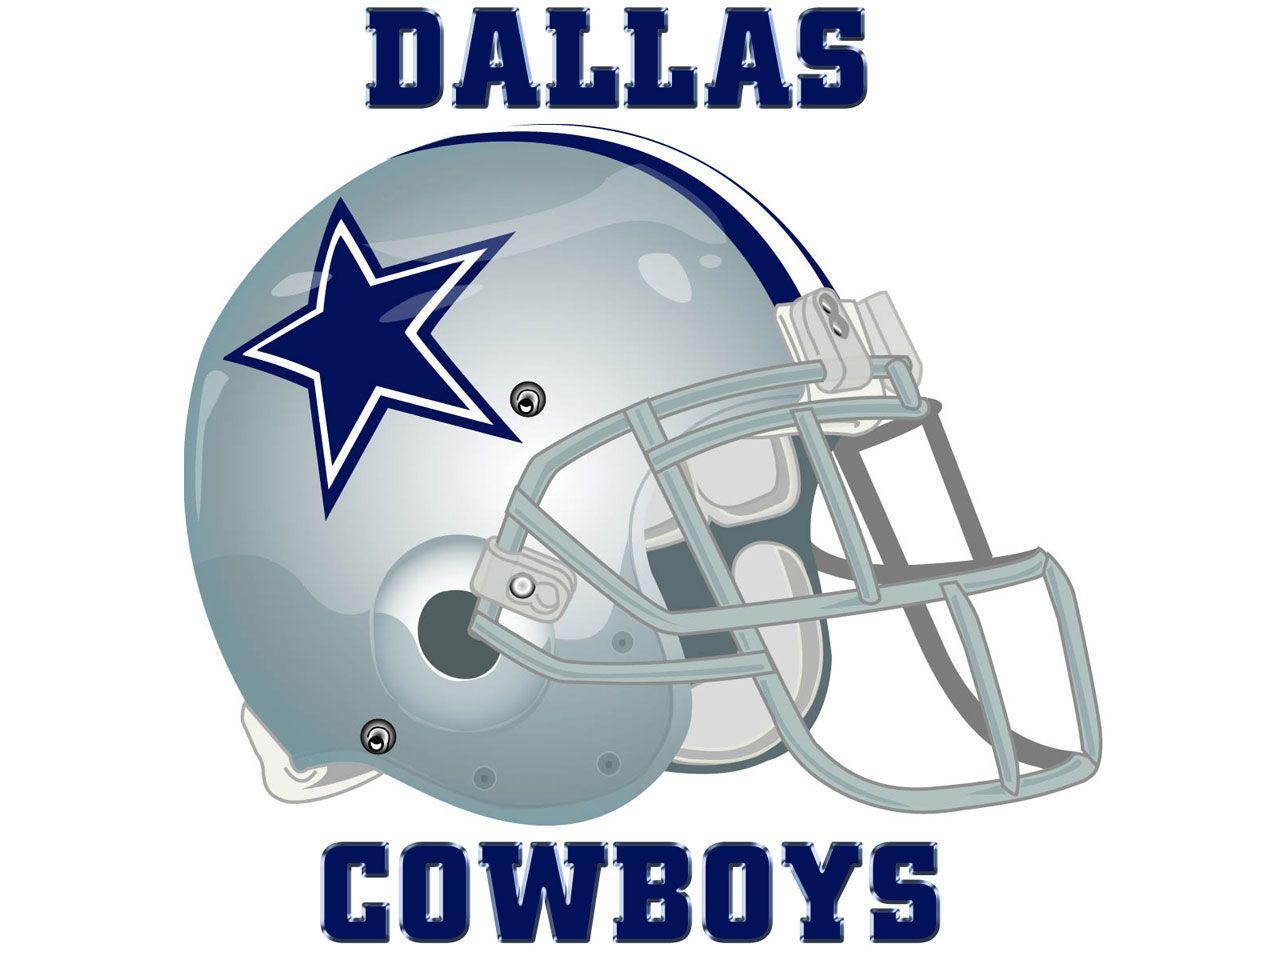 New Dallas Cowboys wallpaper background. Dallas Cowboys wallpaper